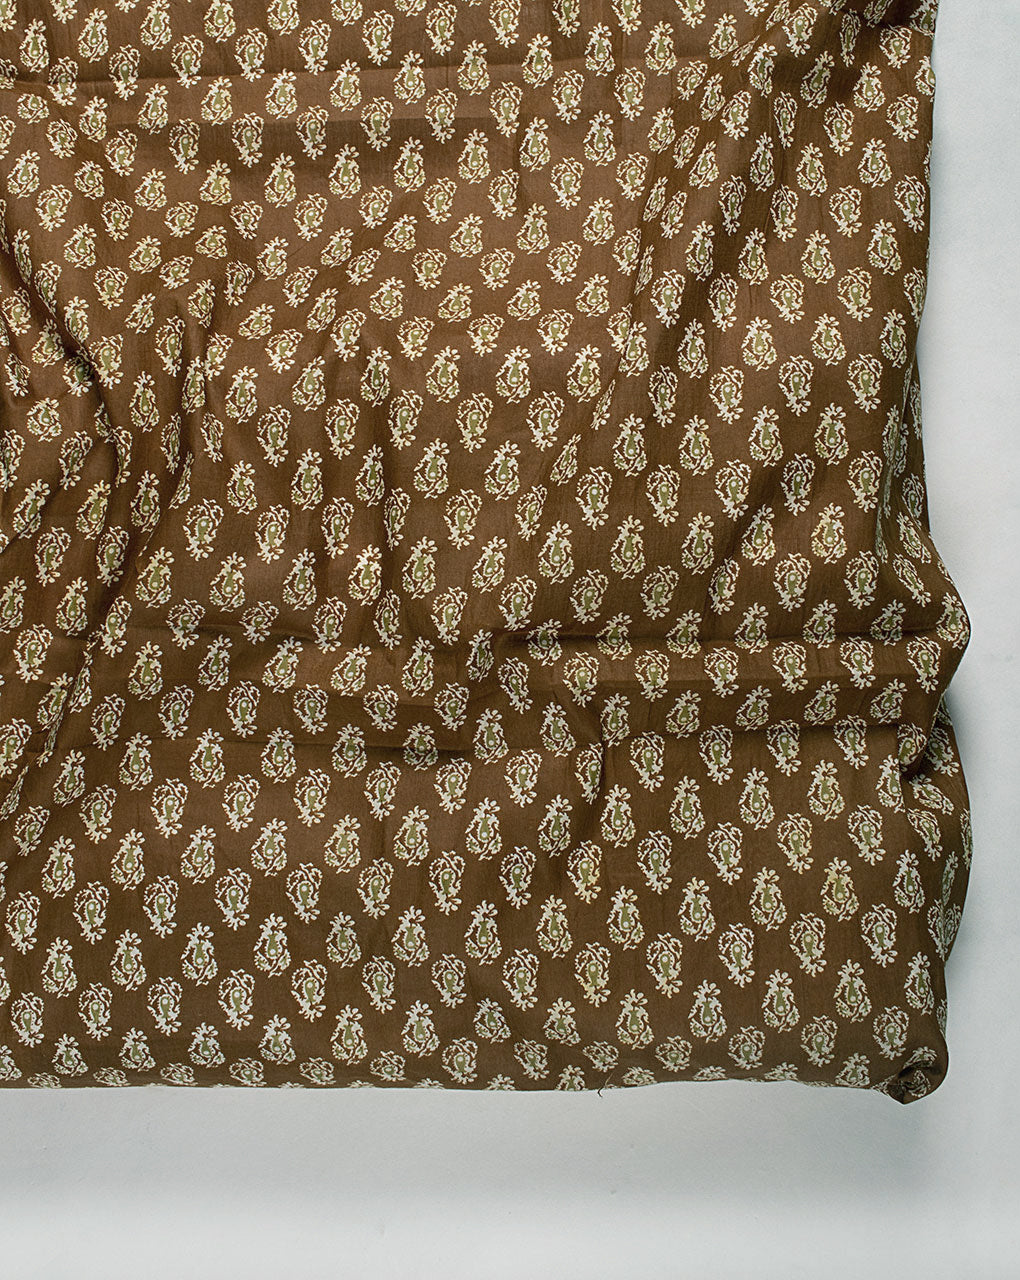 Screen Print Voile Cotton Fabric